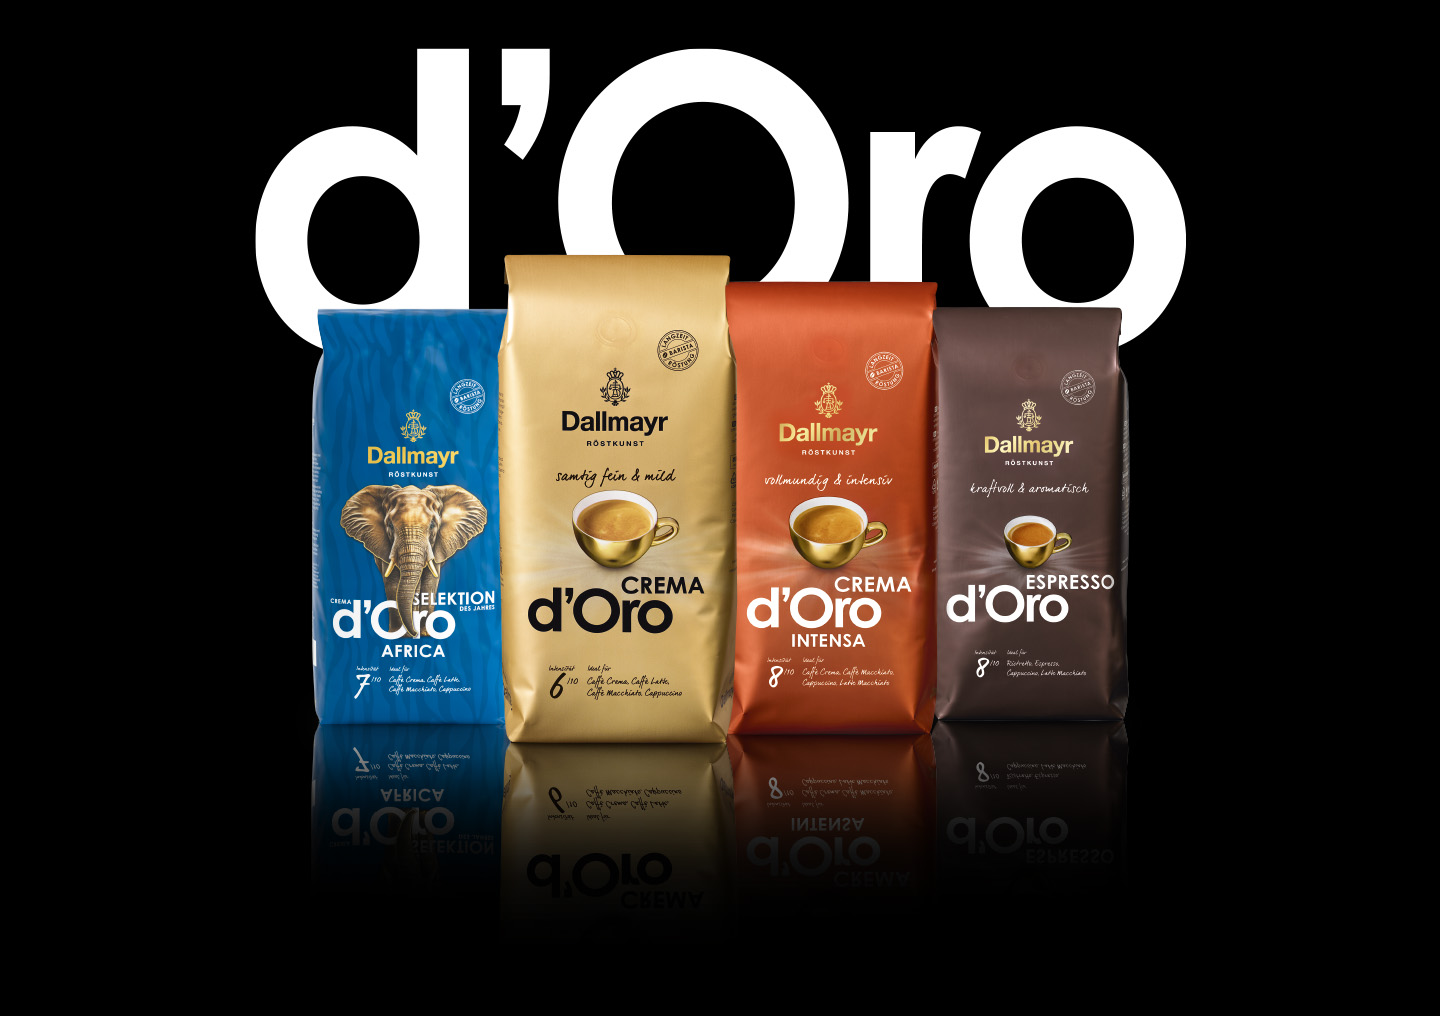 Dallmayr Crema d'Oro, Crema d'Oro Intensa und d'Oro Espresso Verpackungen